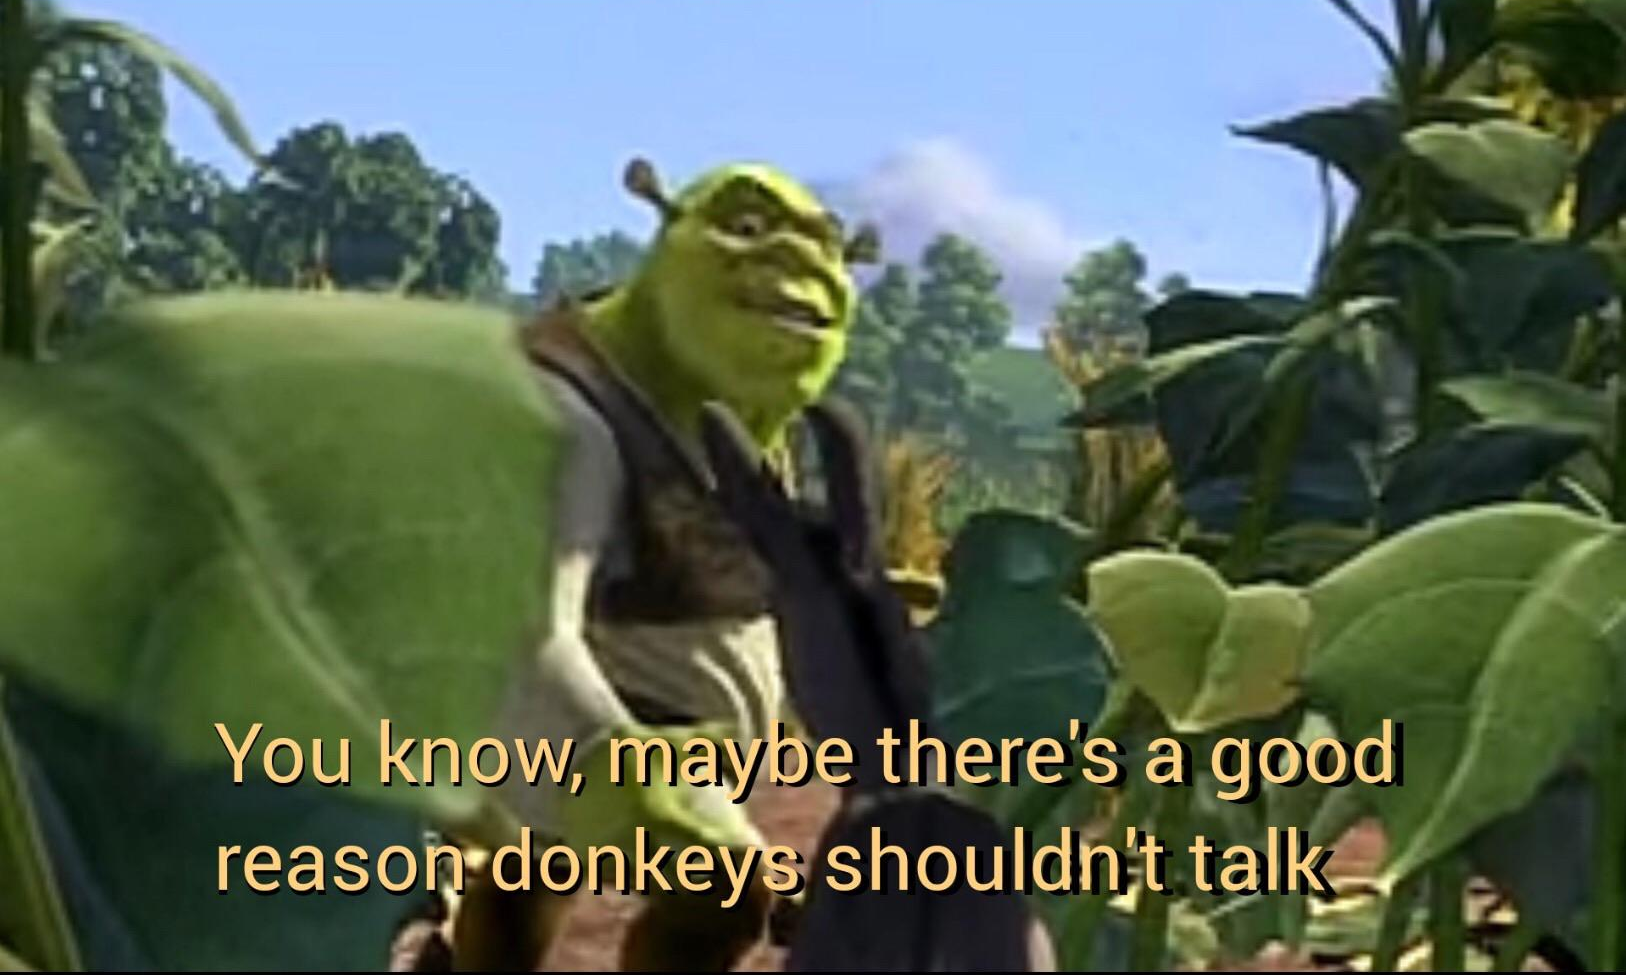 Shrek donkeys shouldn’t talk Blank Meme Template